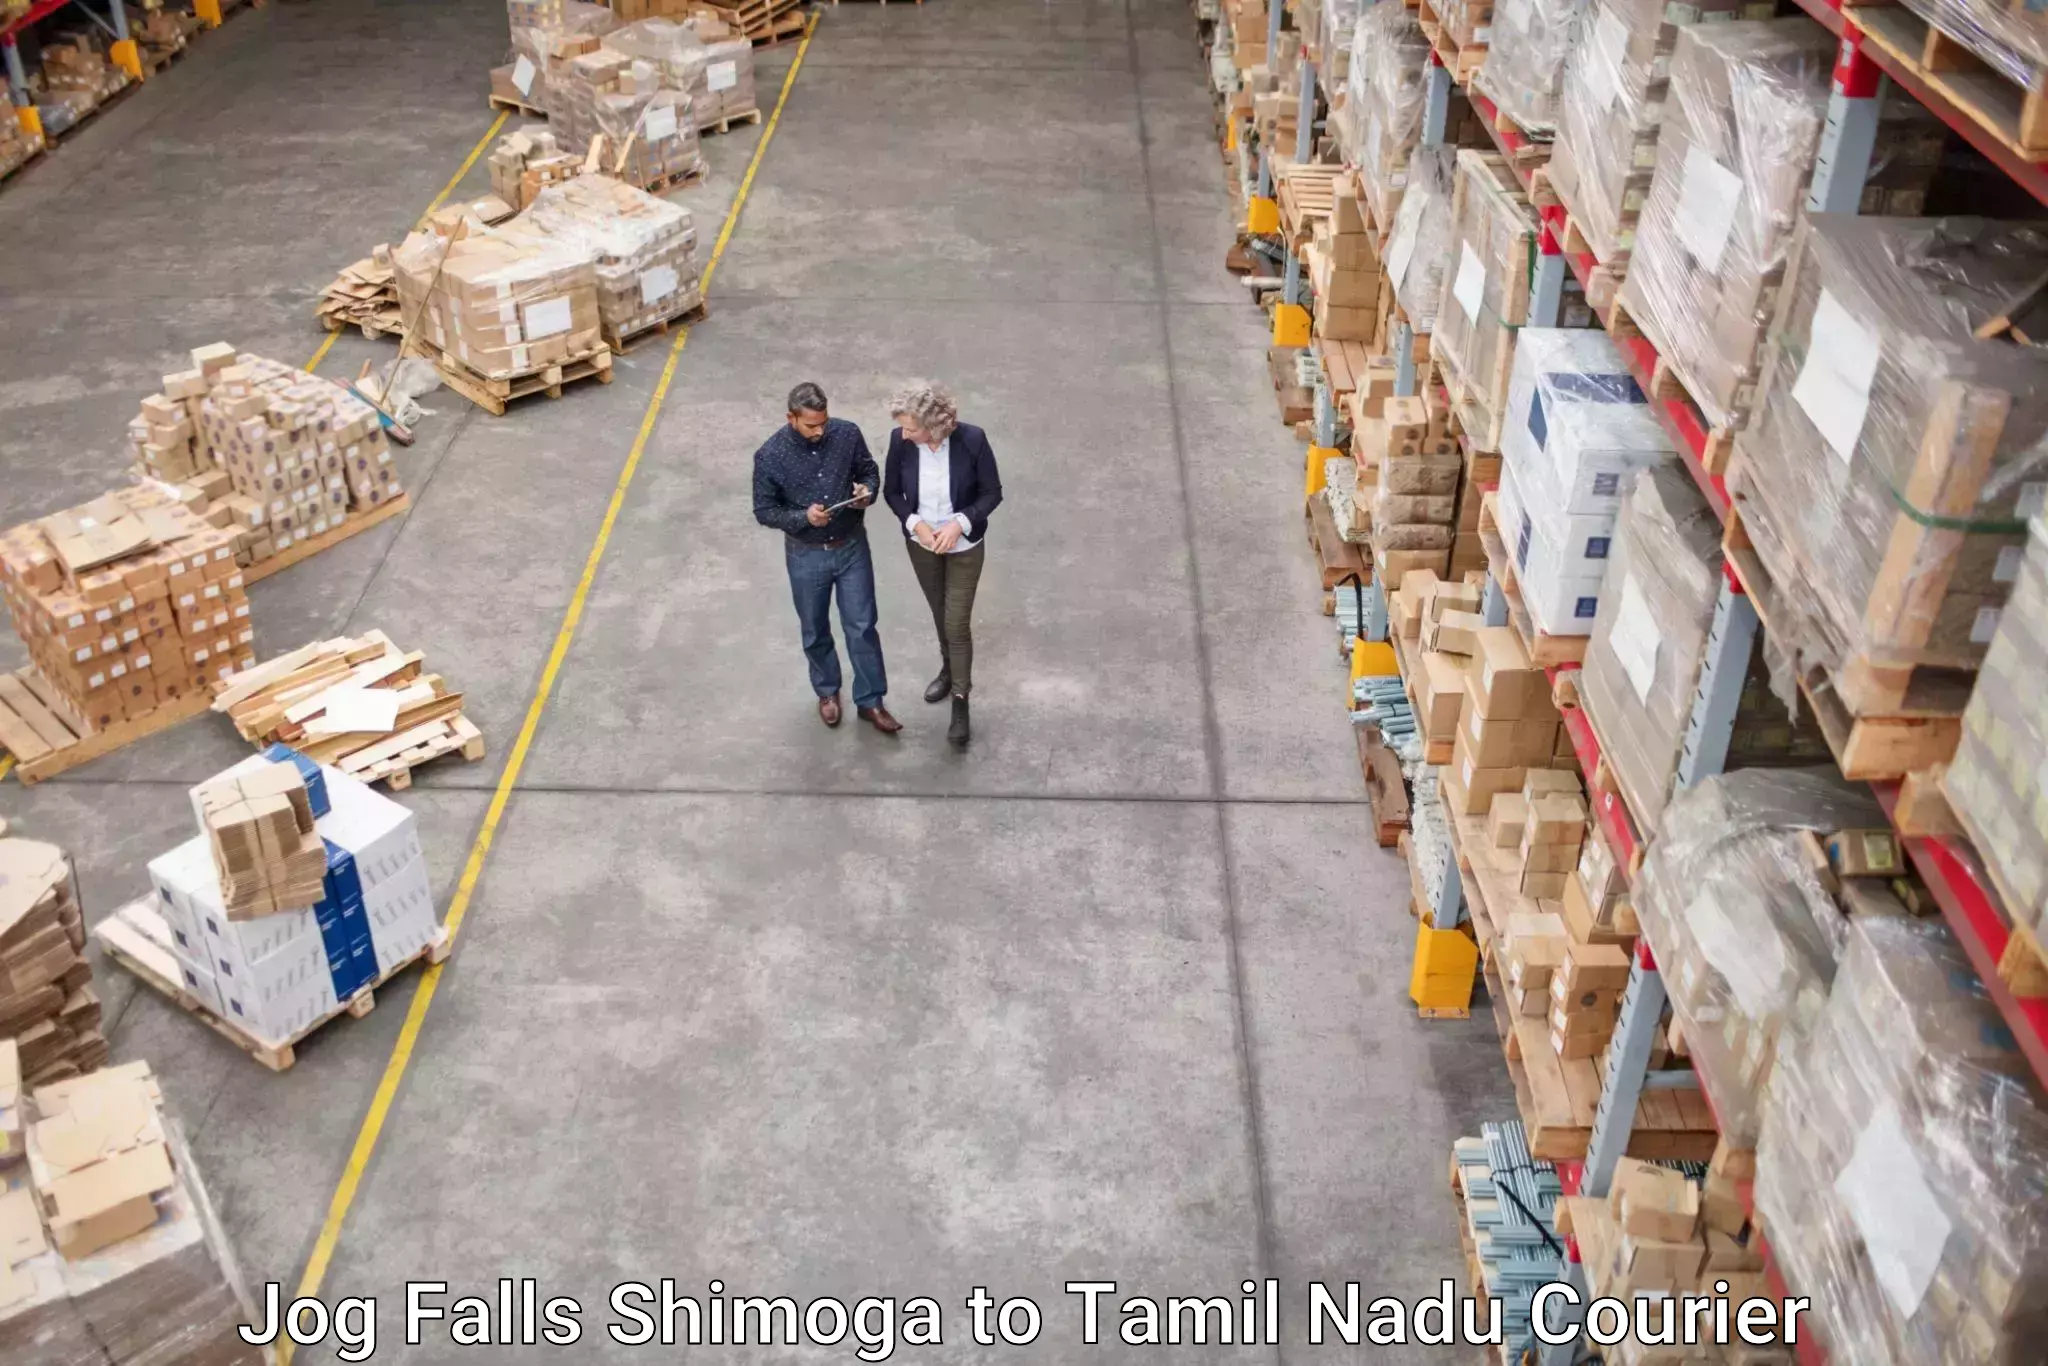 Reliable shipping partners Jog Falls Shimoga to Tiruppur